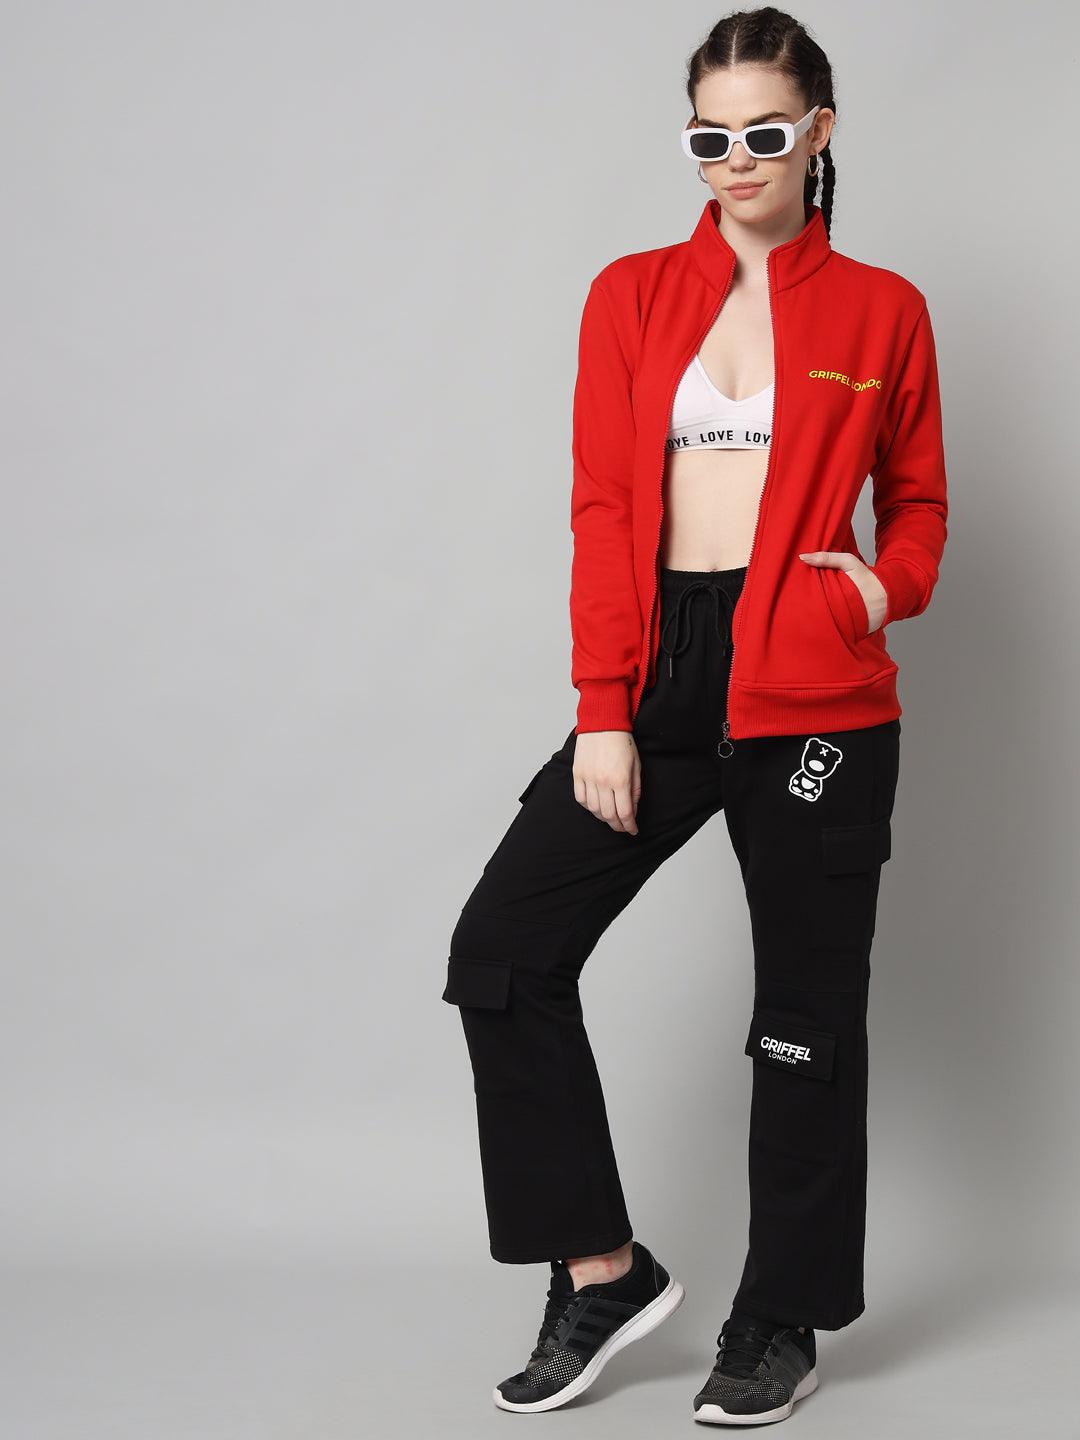 Griffel Women’s Cotton Fleece Full Sleeve Red Zipper Sweatshirt - griffel